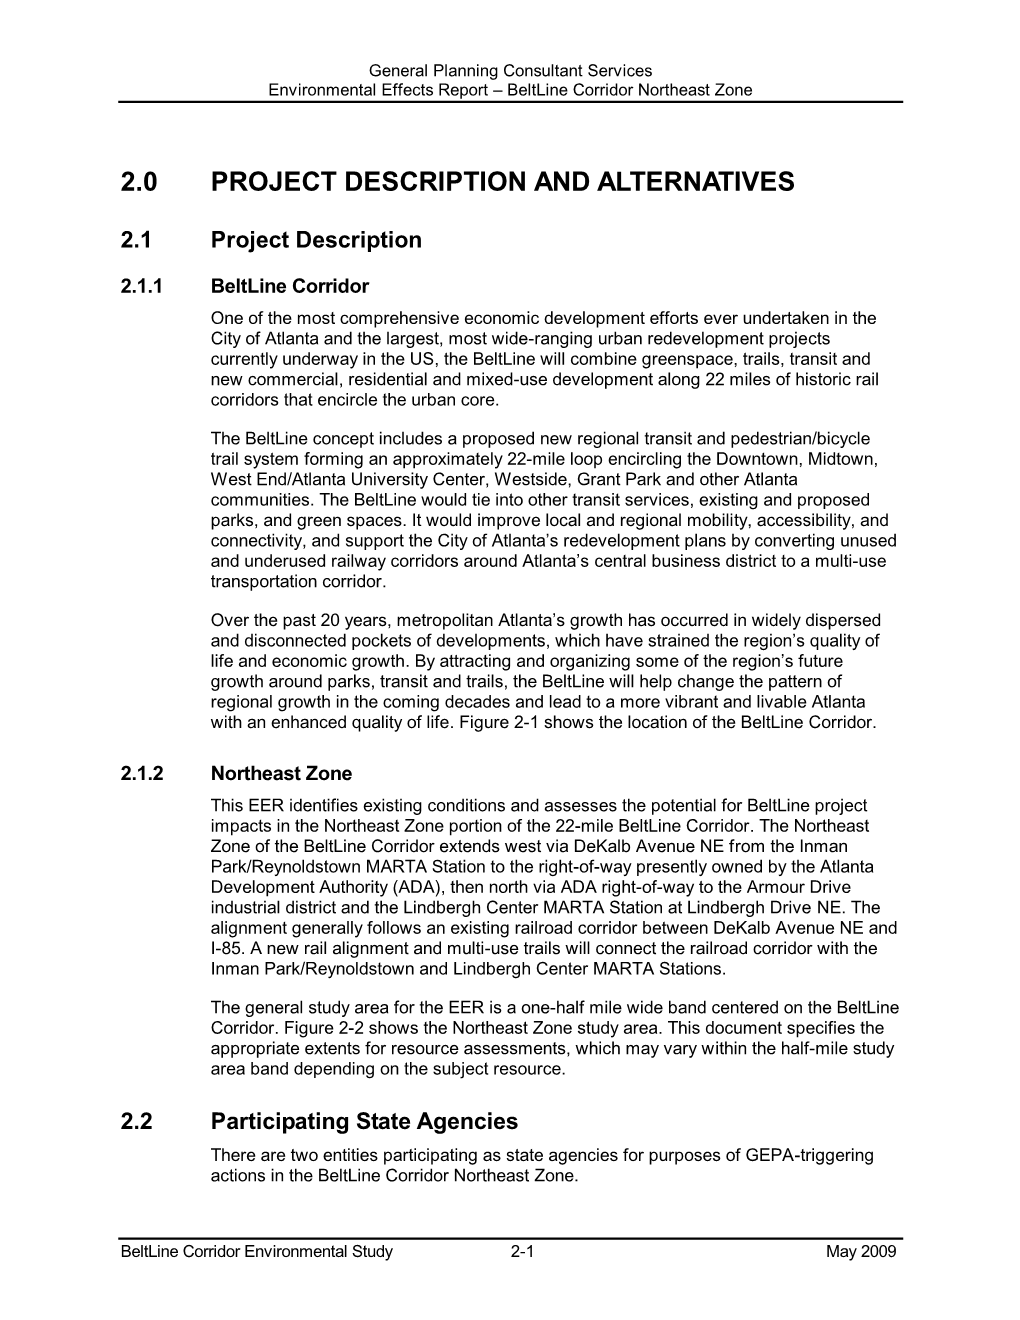 Project Description and Alternatives